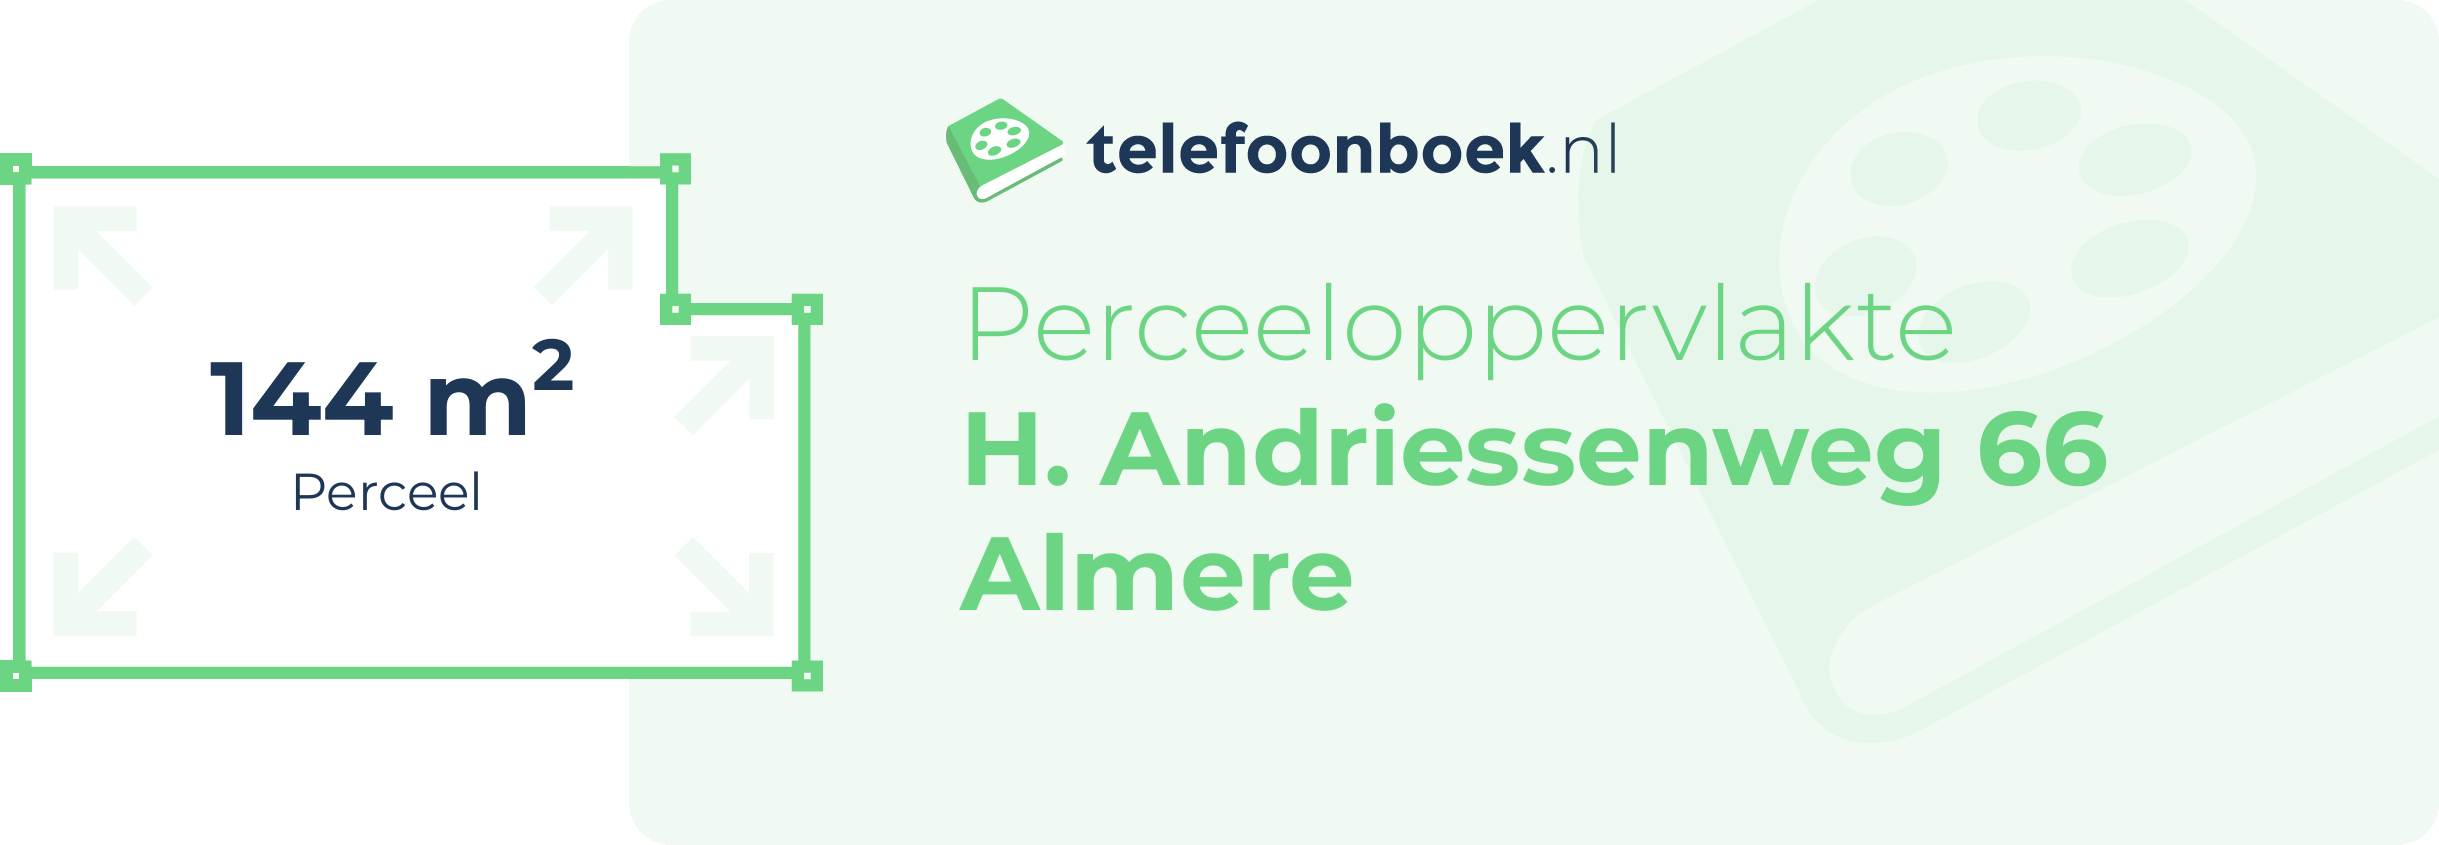 Perceeloppervlakte H. Andriessenweg 66 Almere